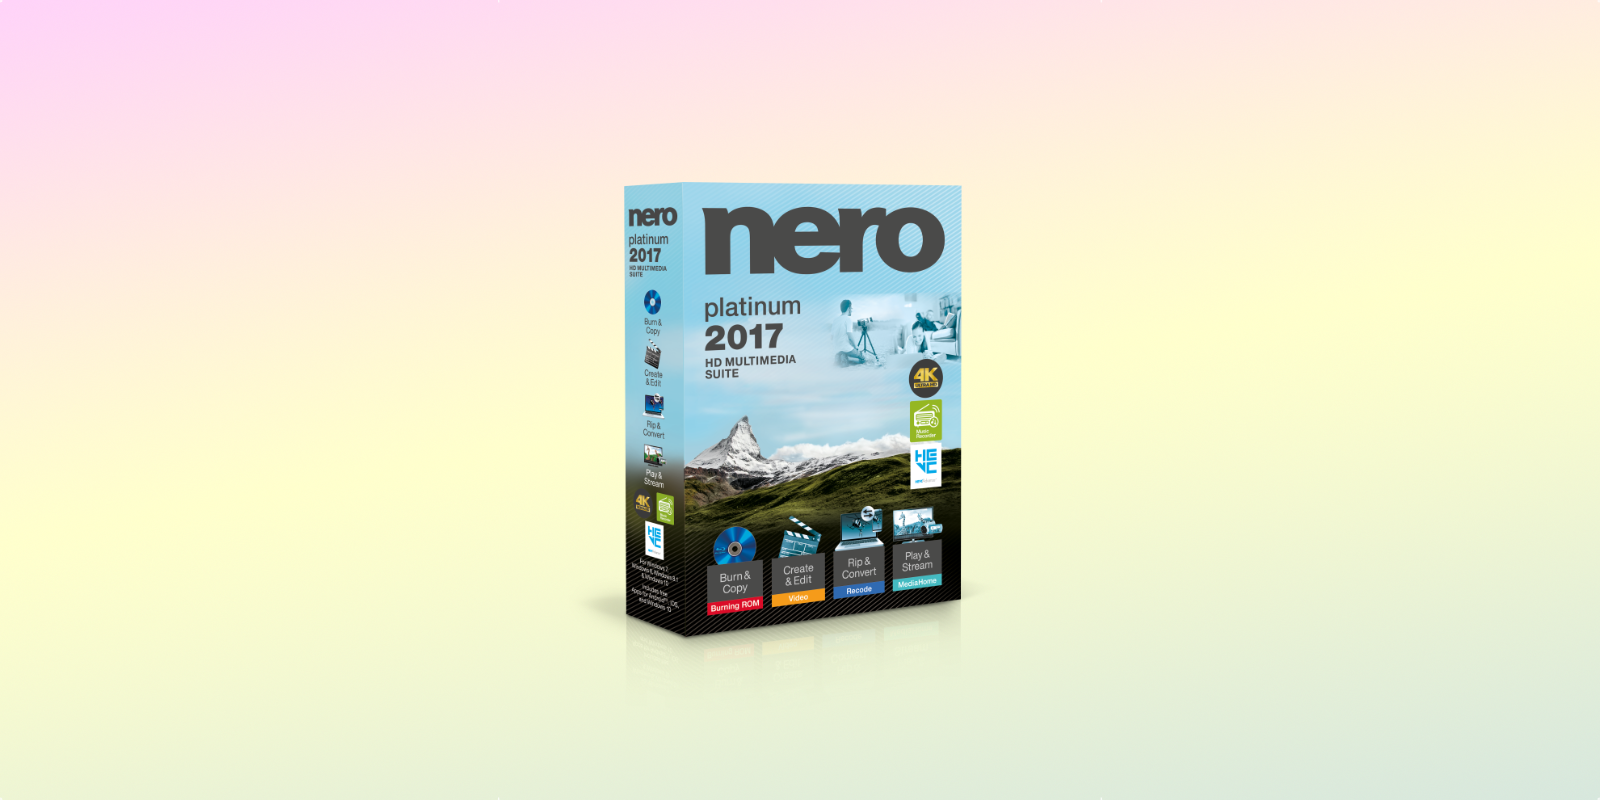 Nero 2017 Platinum Box Shot